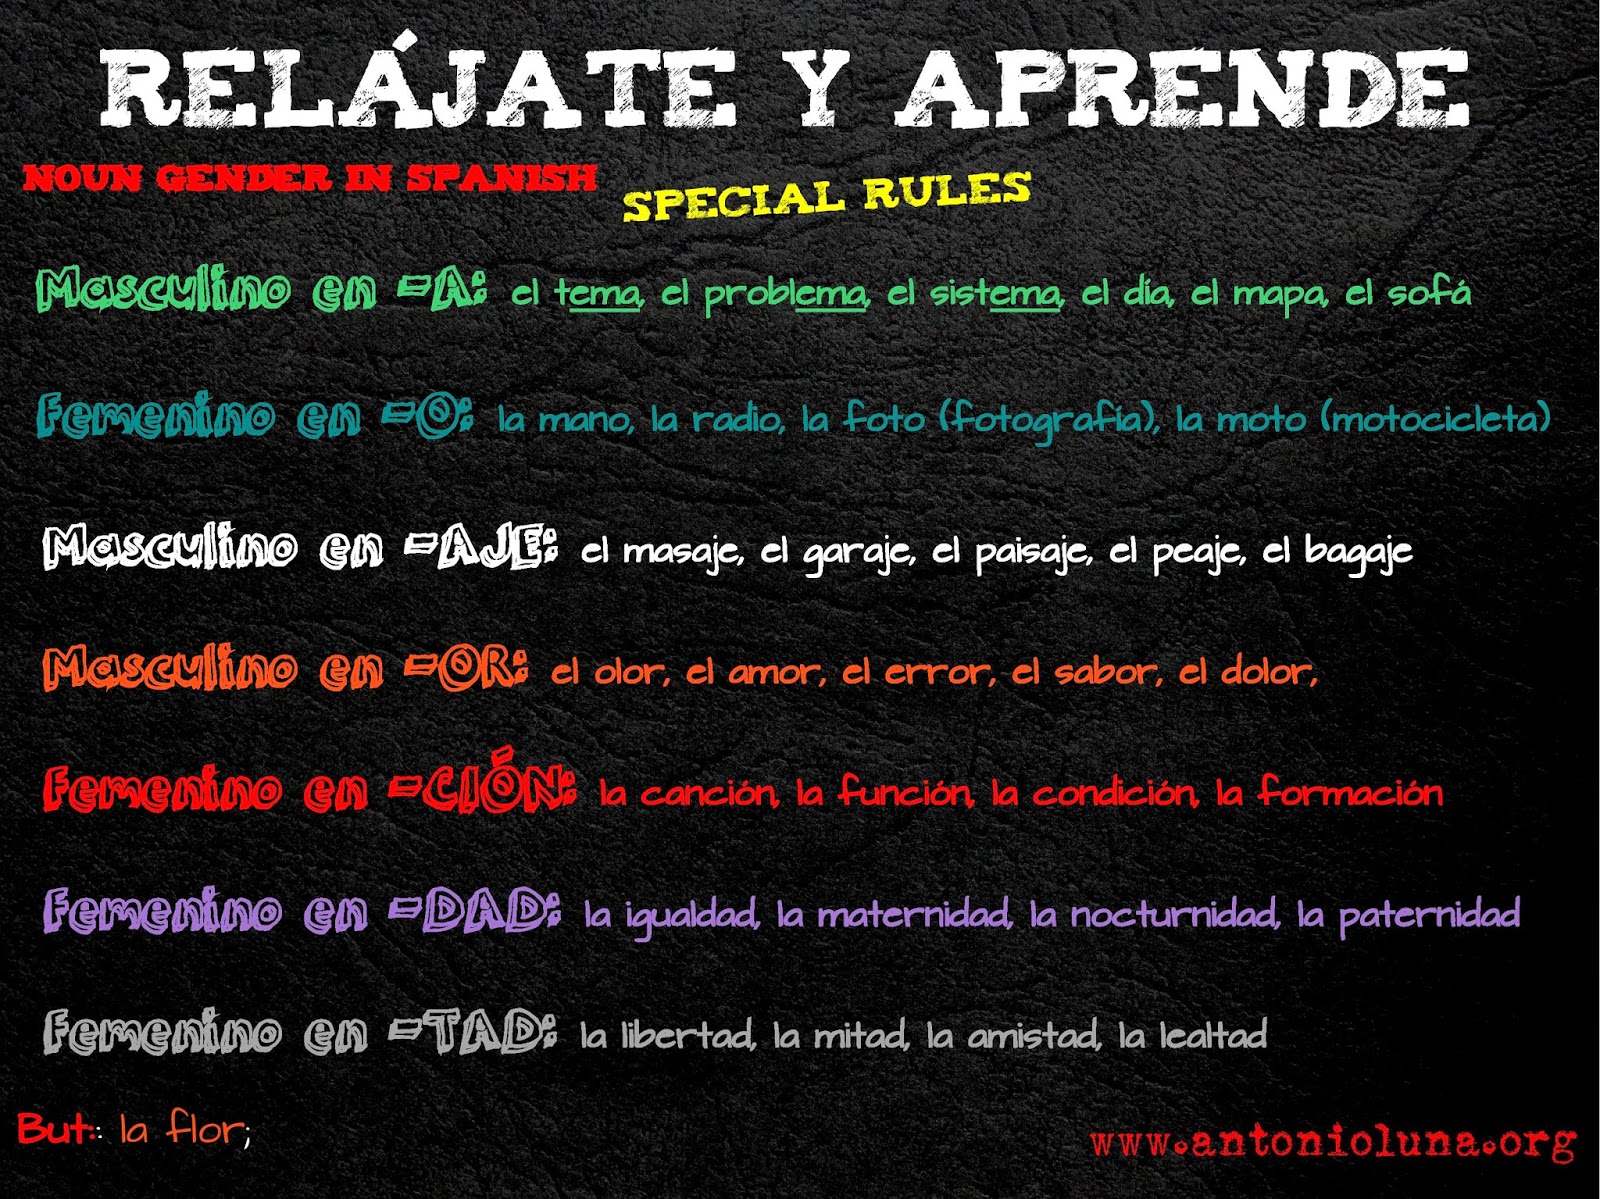 noun-gender-in-spanish-special-rules-compilation-luna-profe